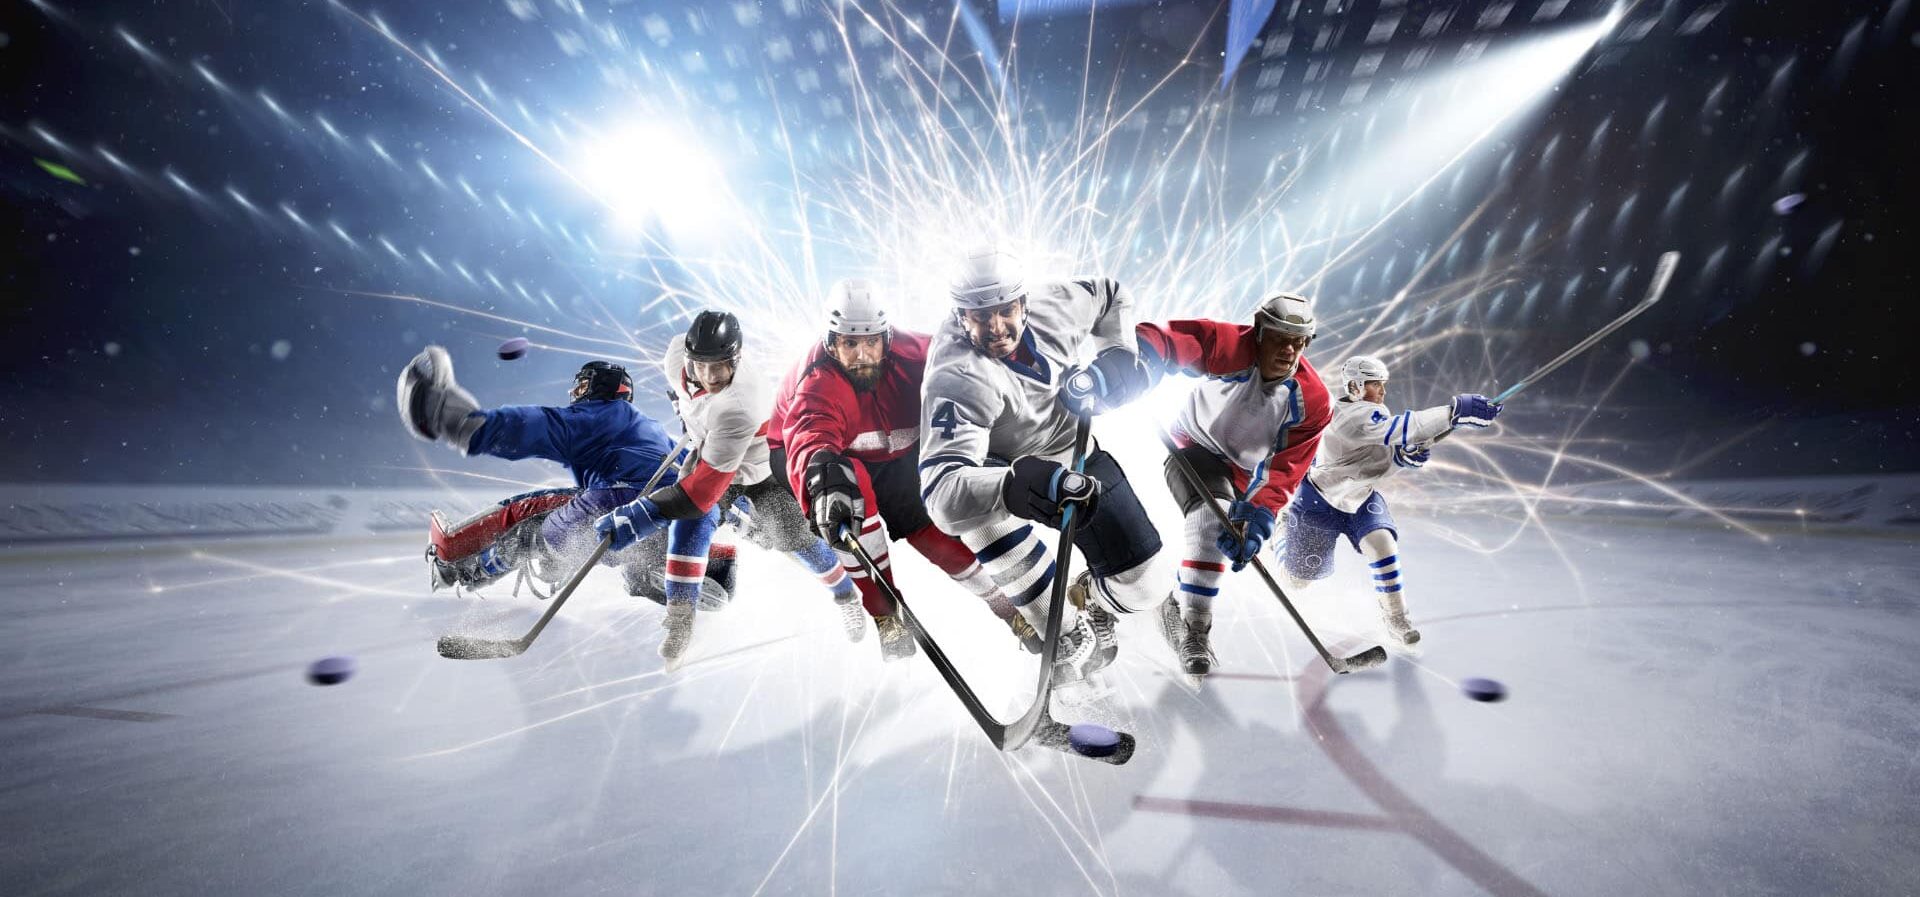 Eishockey CHL live im TV and Stream mit der waipu App